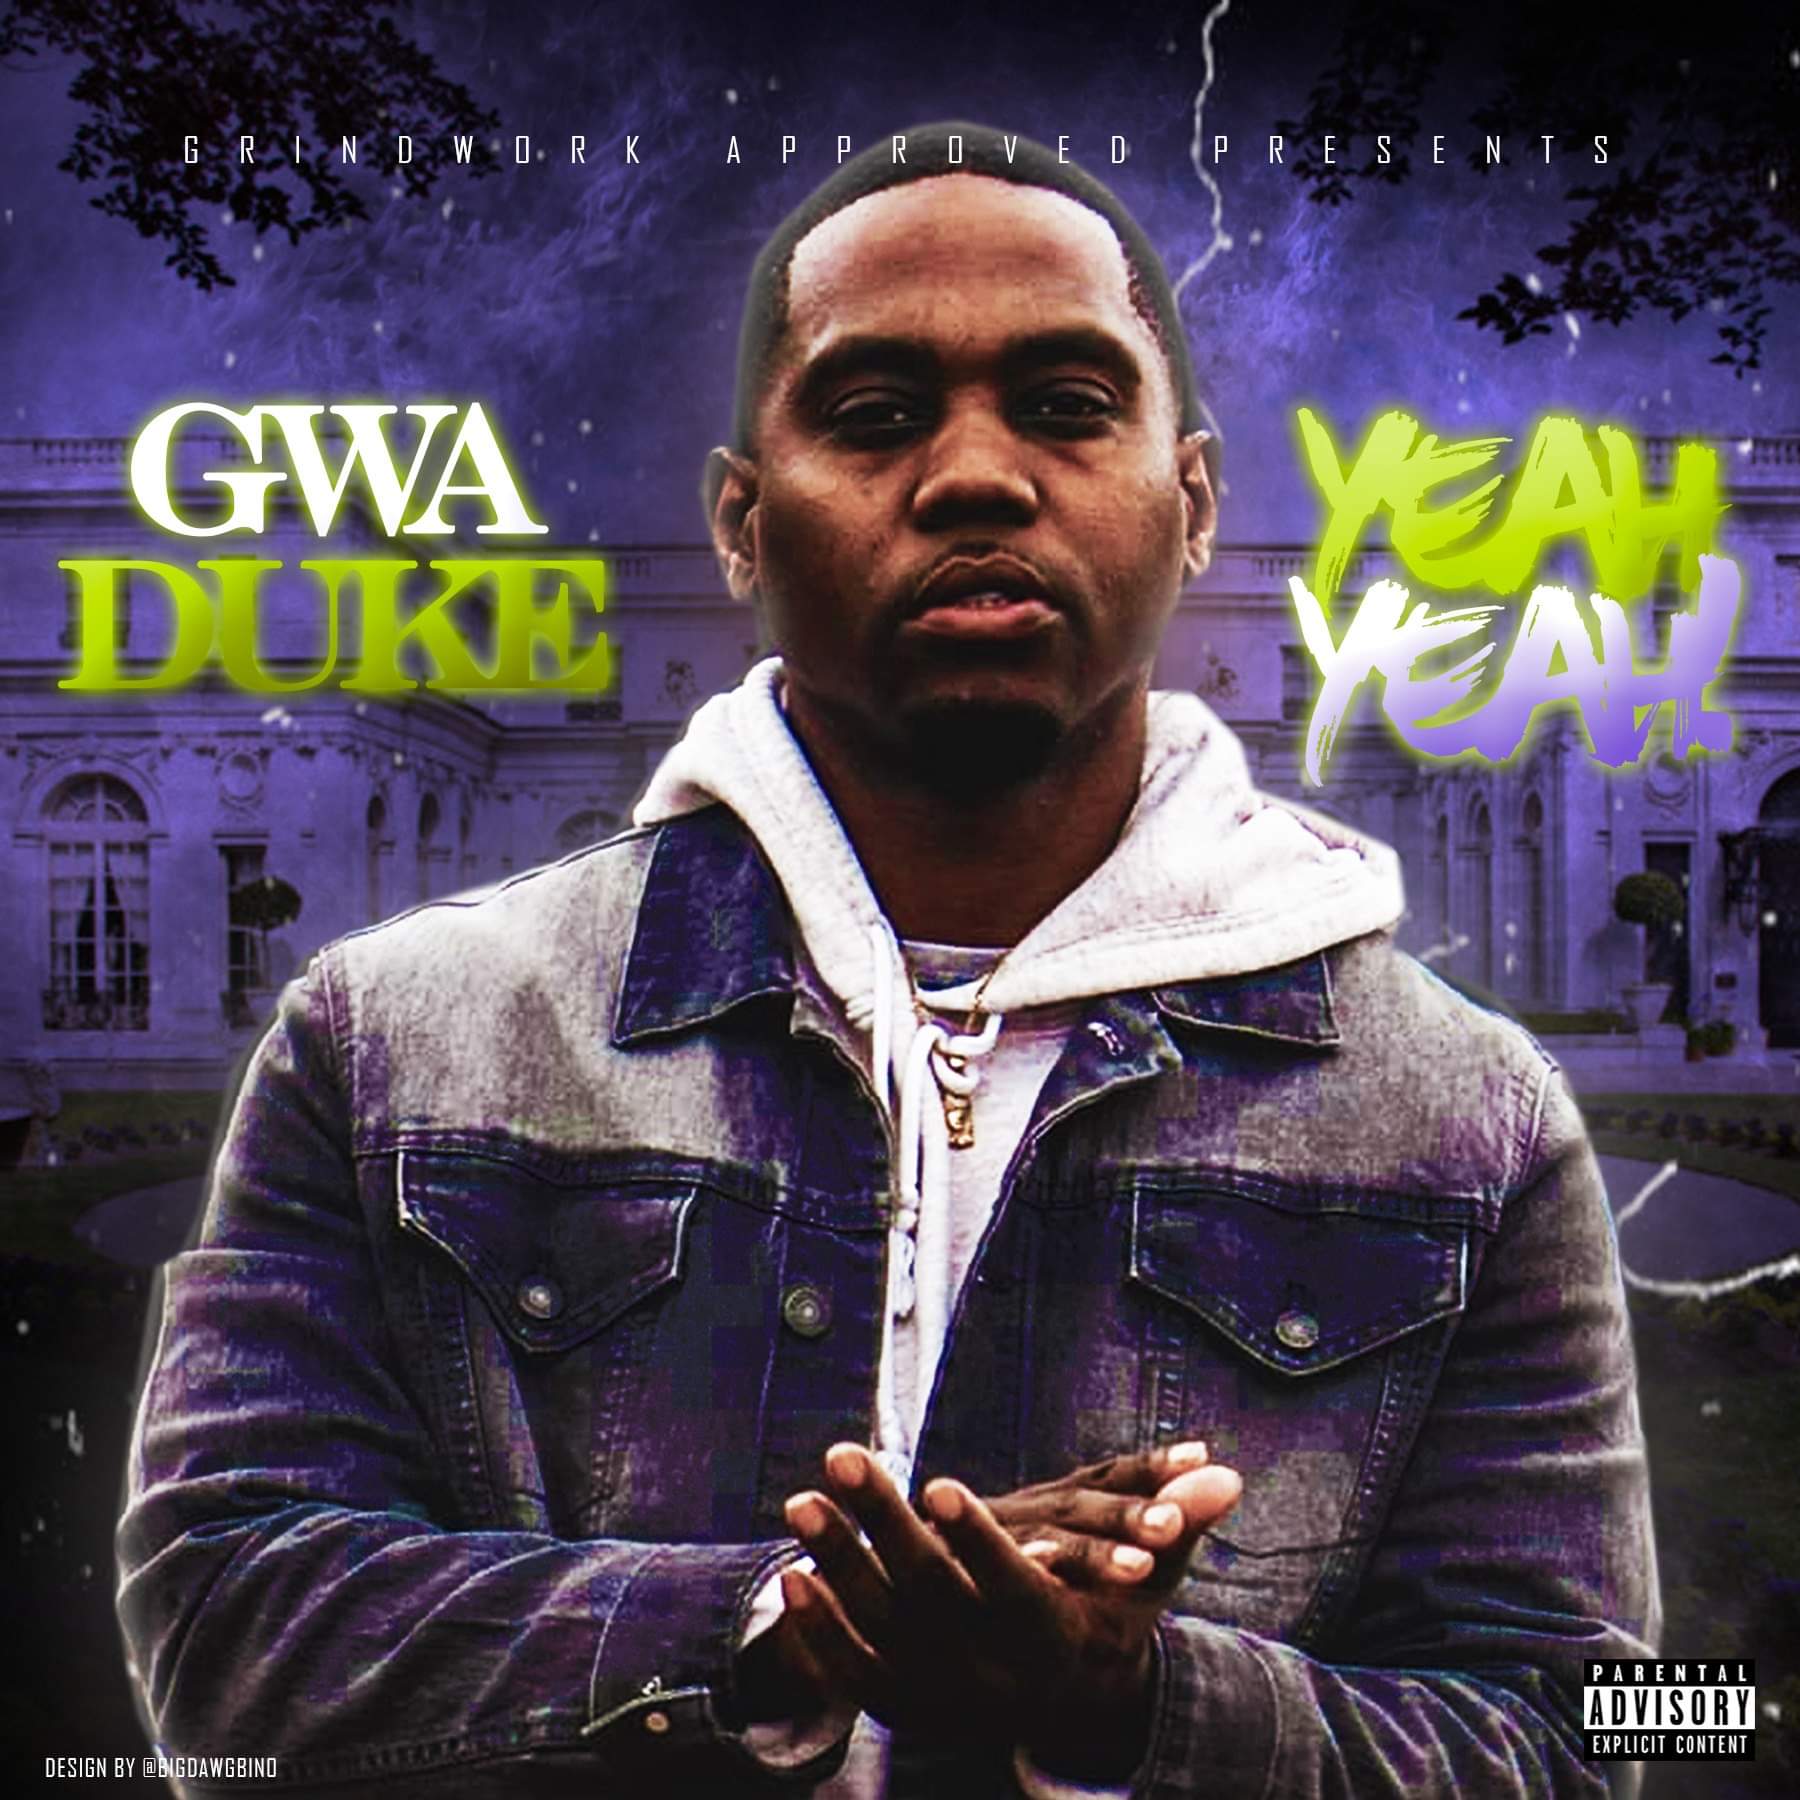 [Single] GWA Duke – Yeah Yeah @duke_gwa